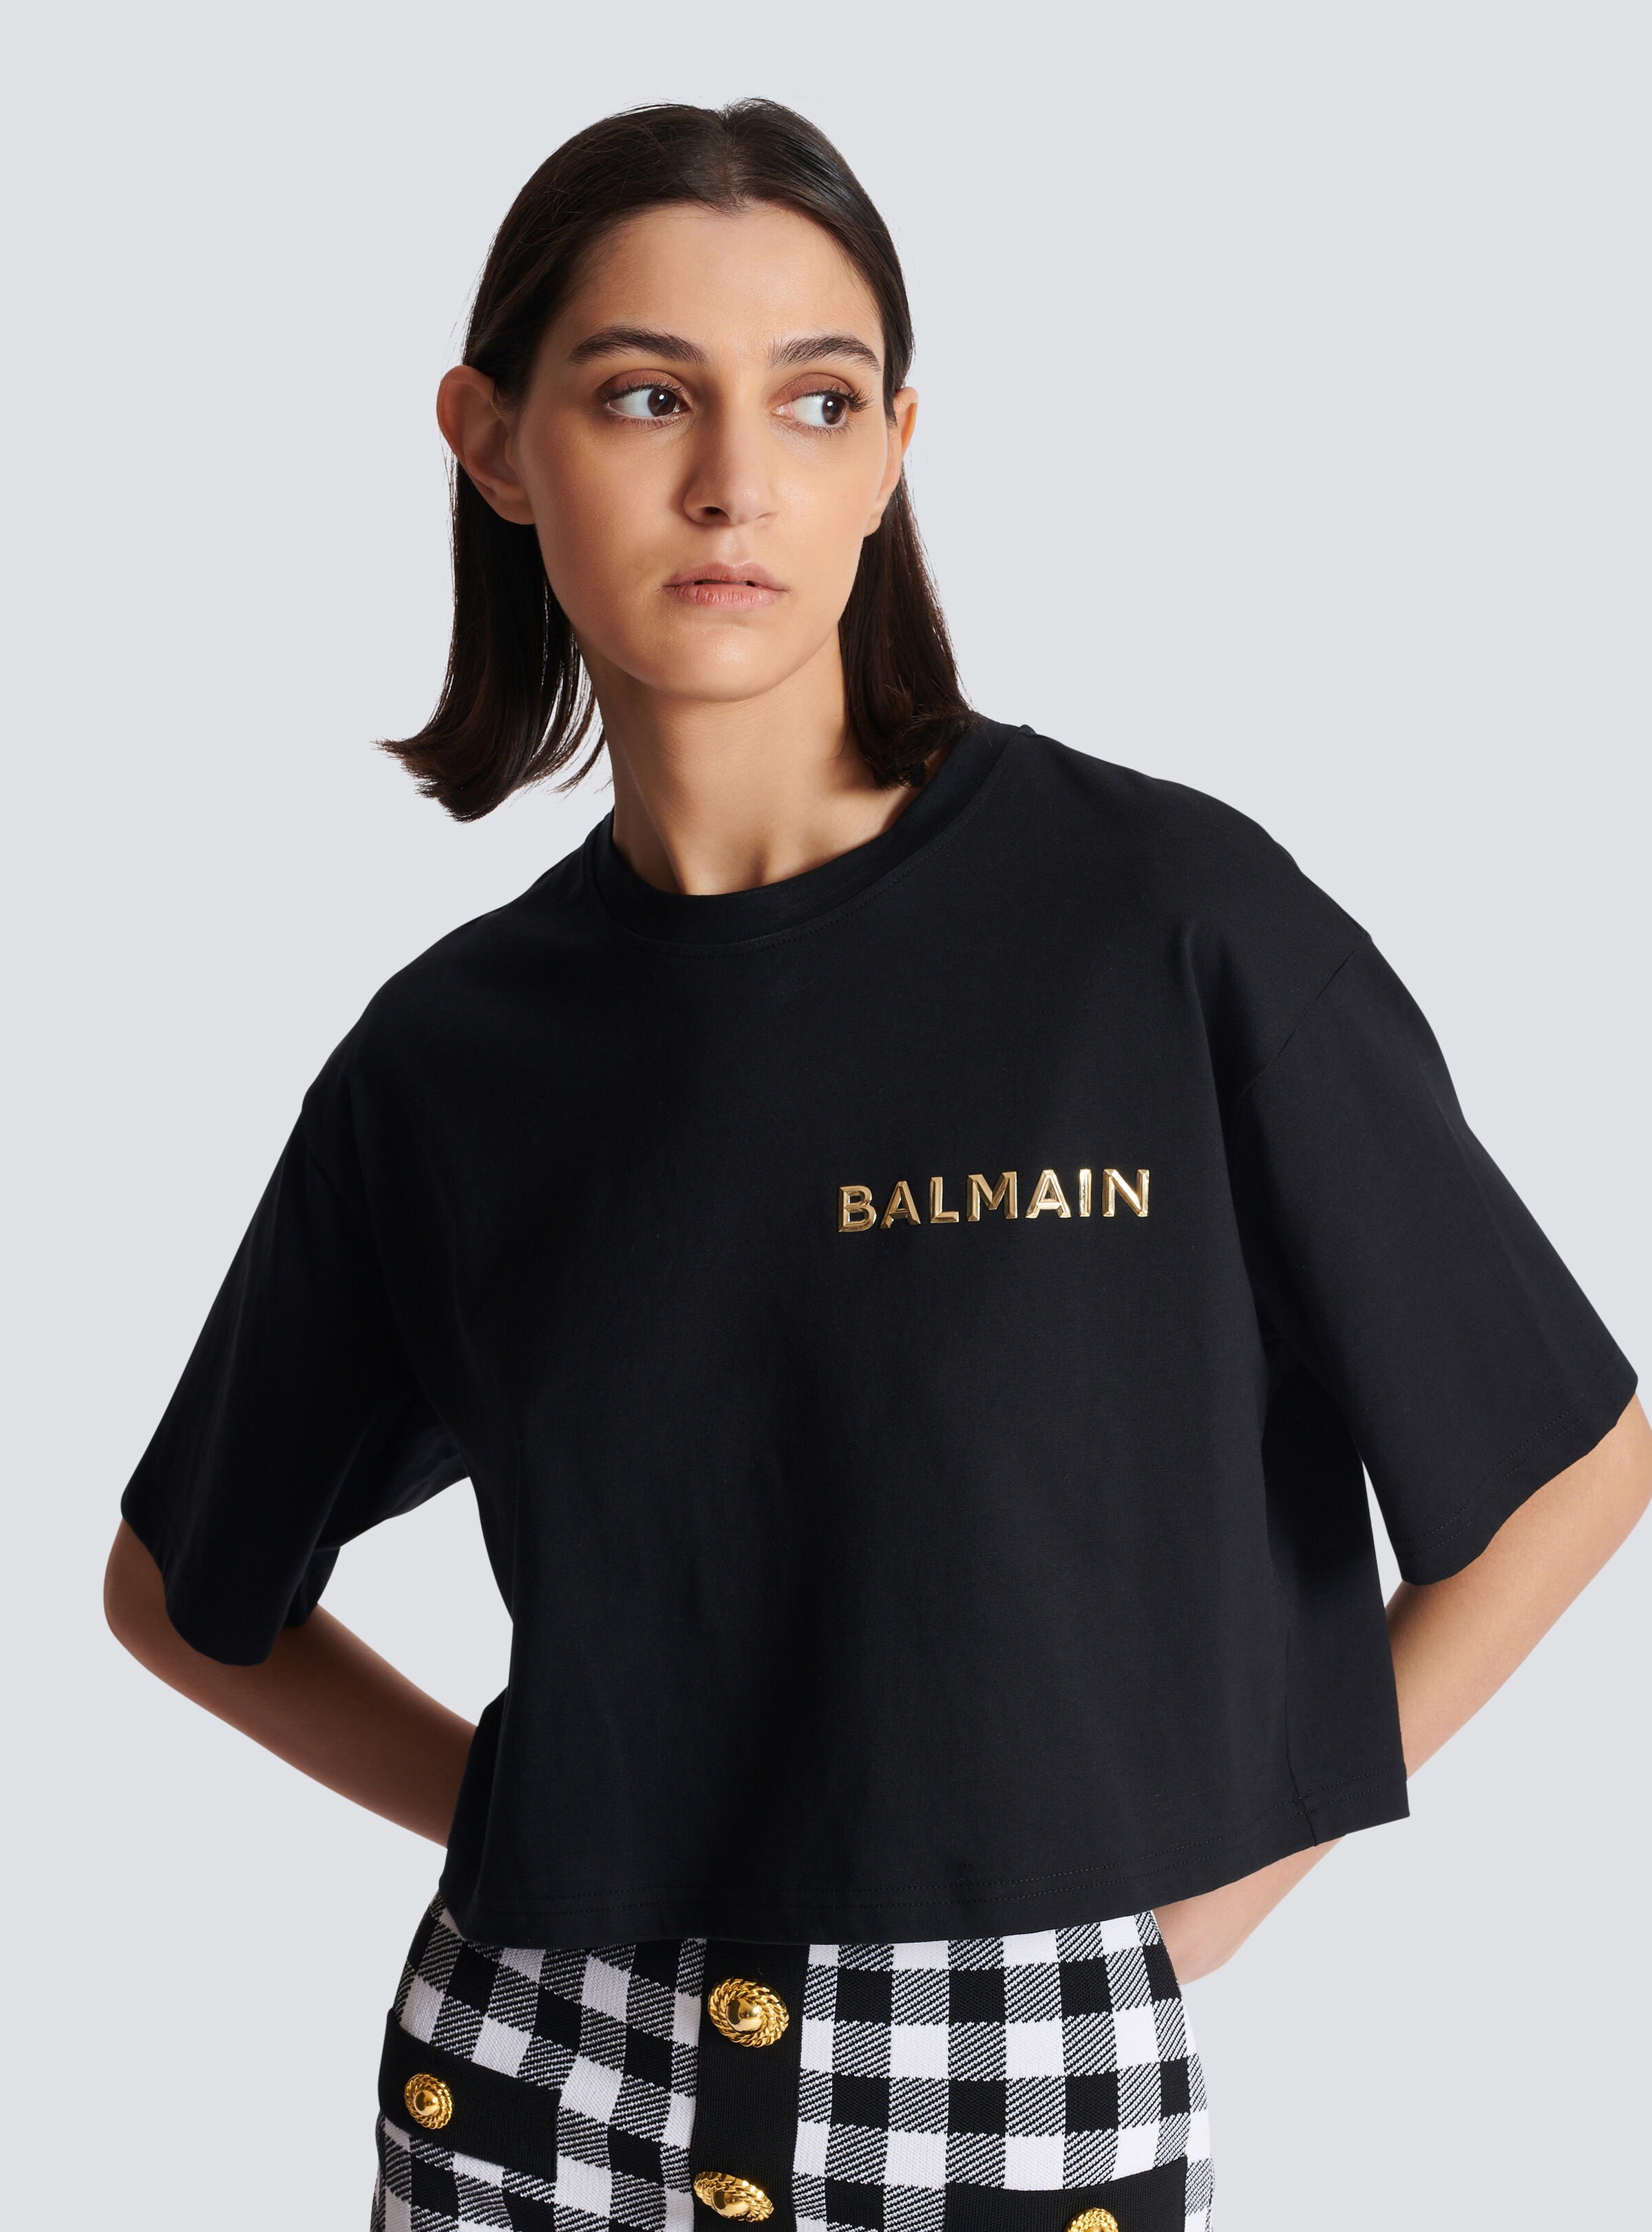 T-shirt with laminated Balmain logo - 6